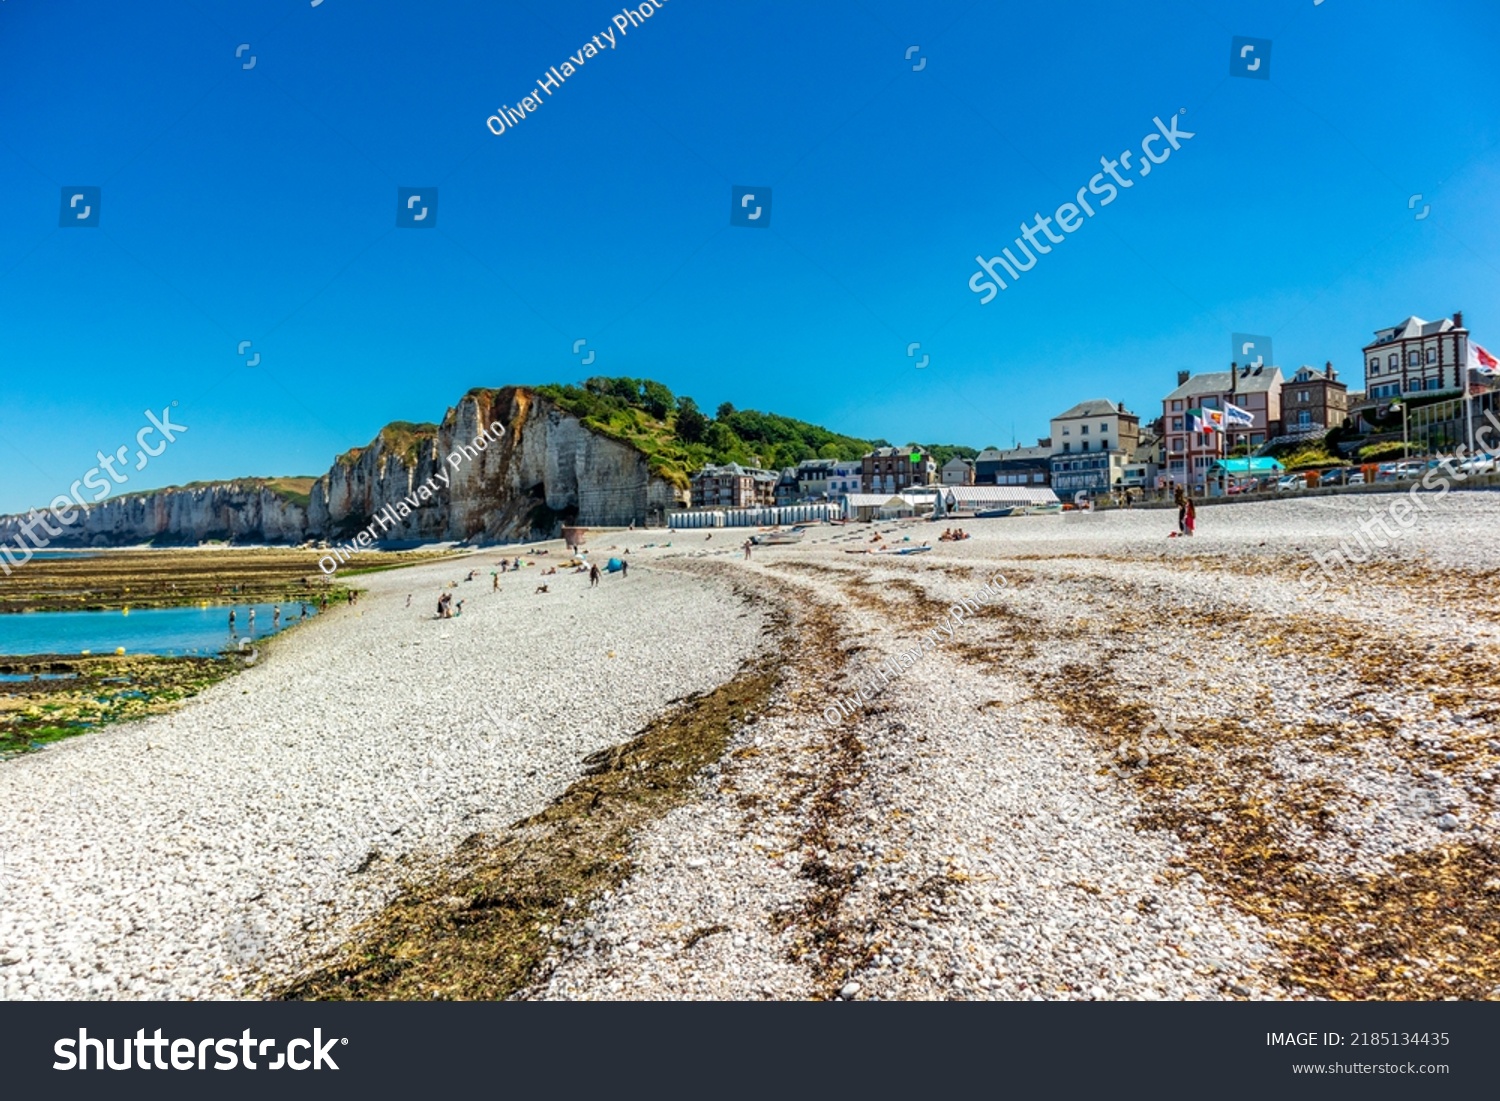 Beach walk on the beautiful alabaster coast near Yport - Normandy - France #2185134435